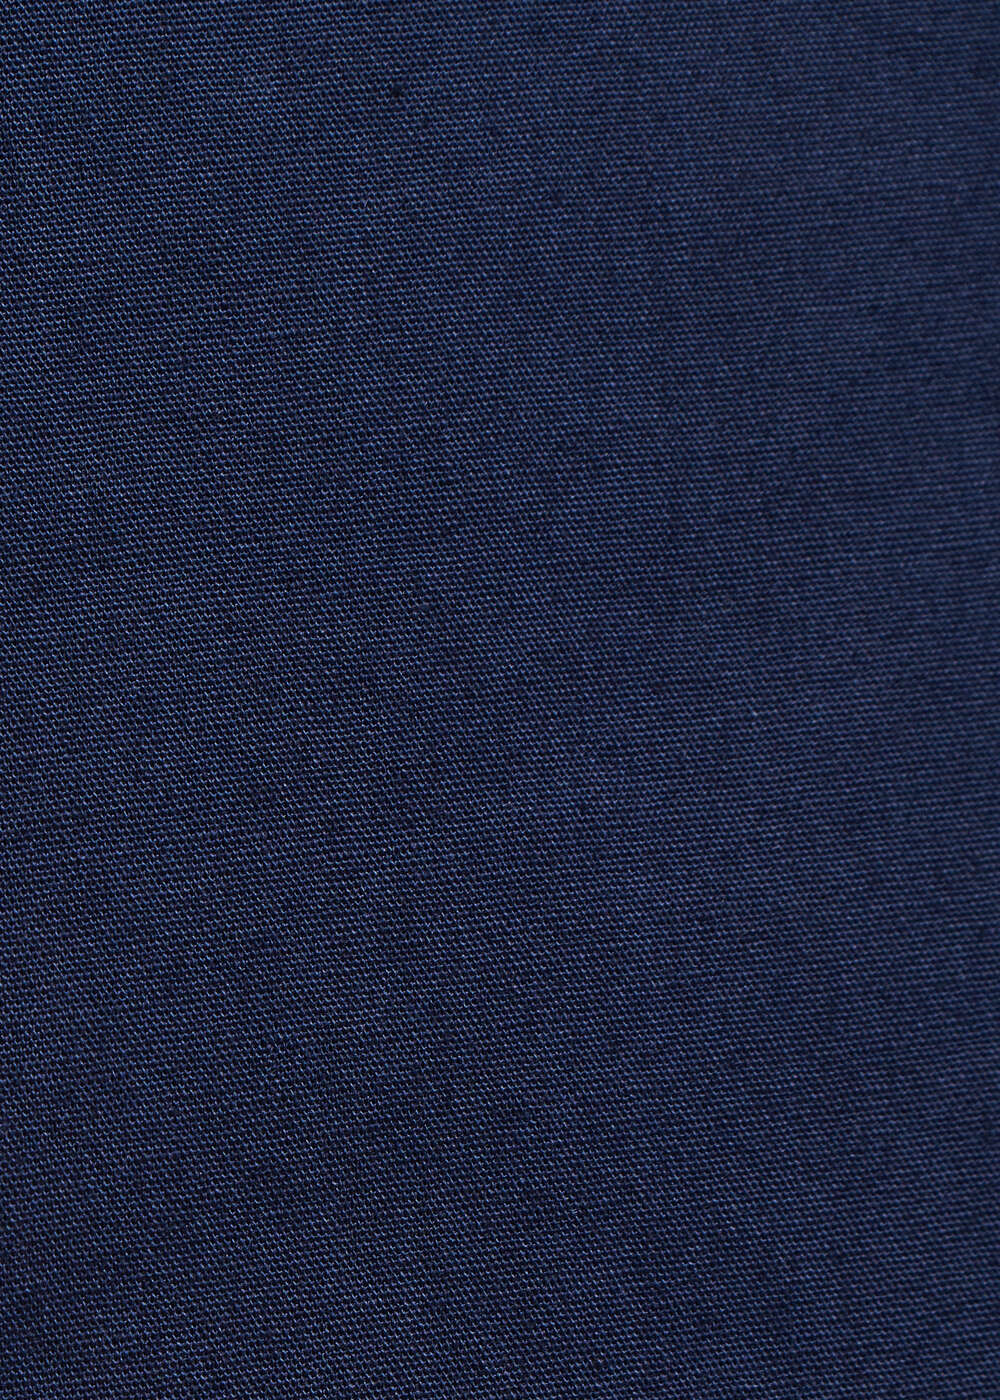 Robe mi-longue housse bleu marine en popeline de coton - MARINE#couleur_MARINE